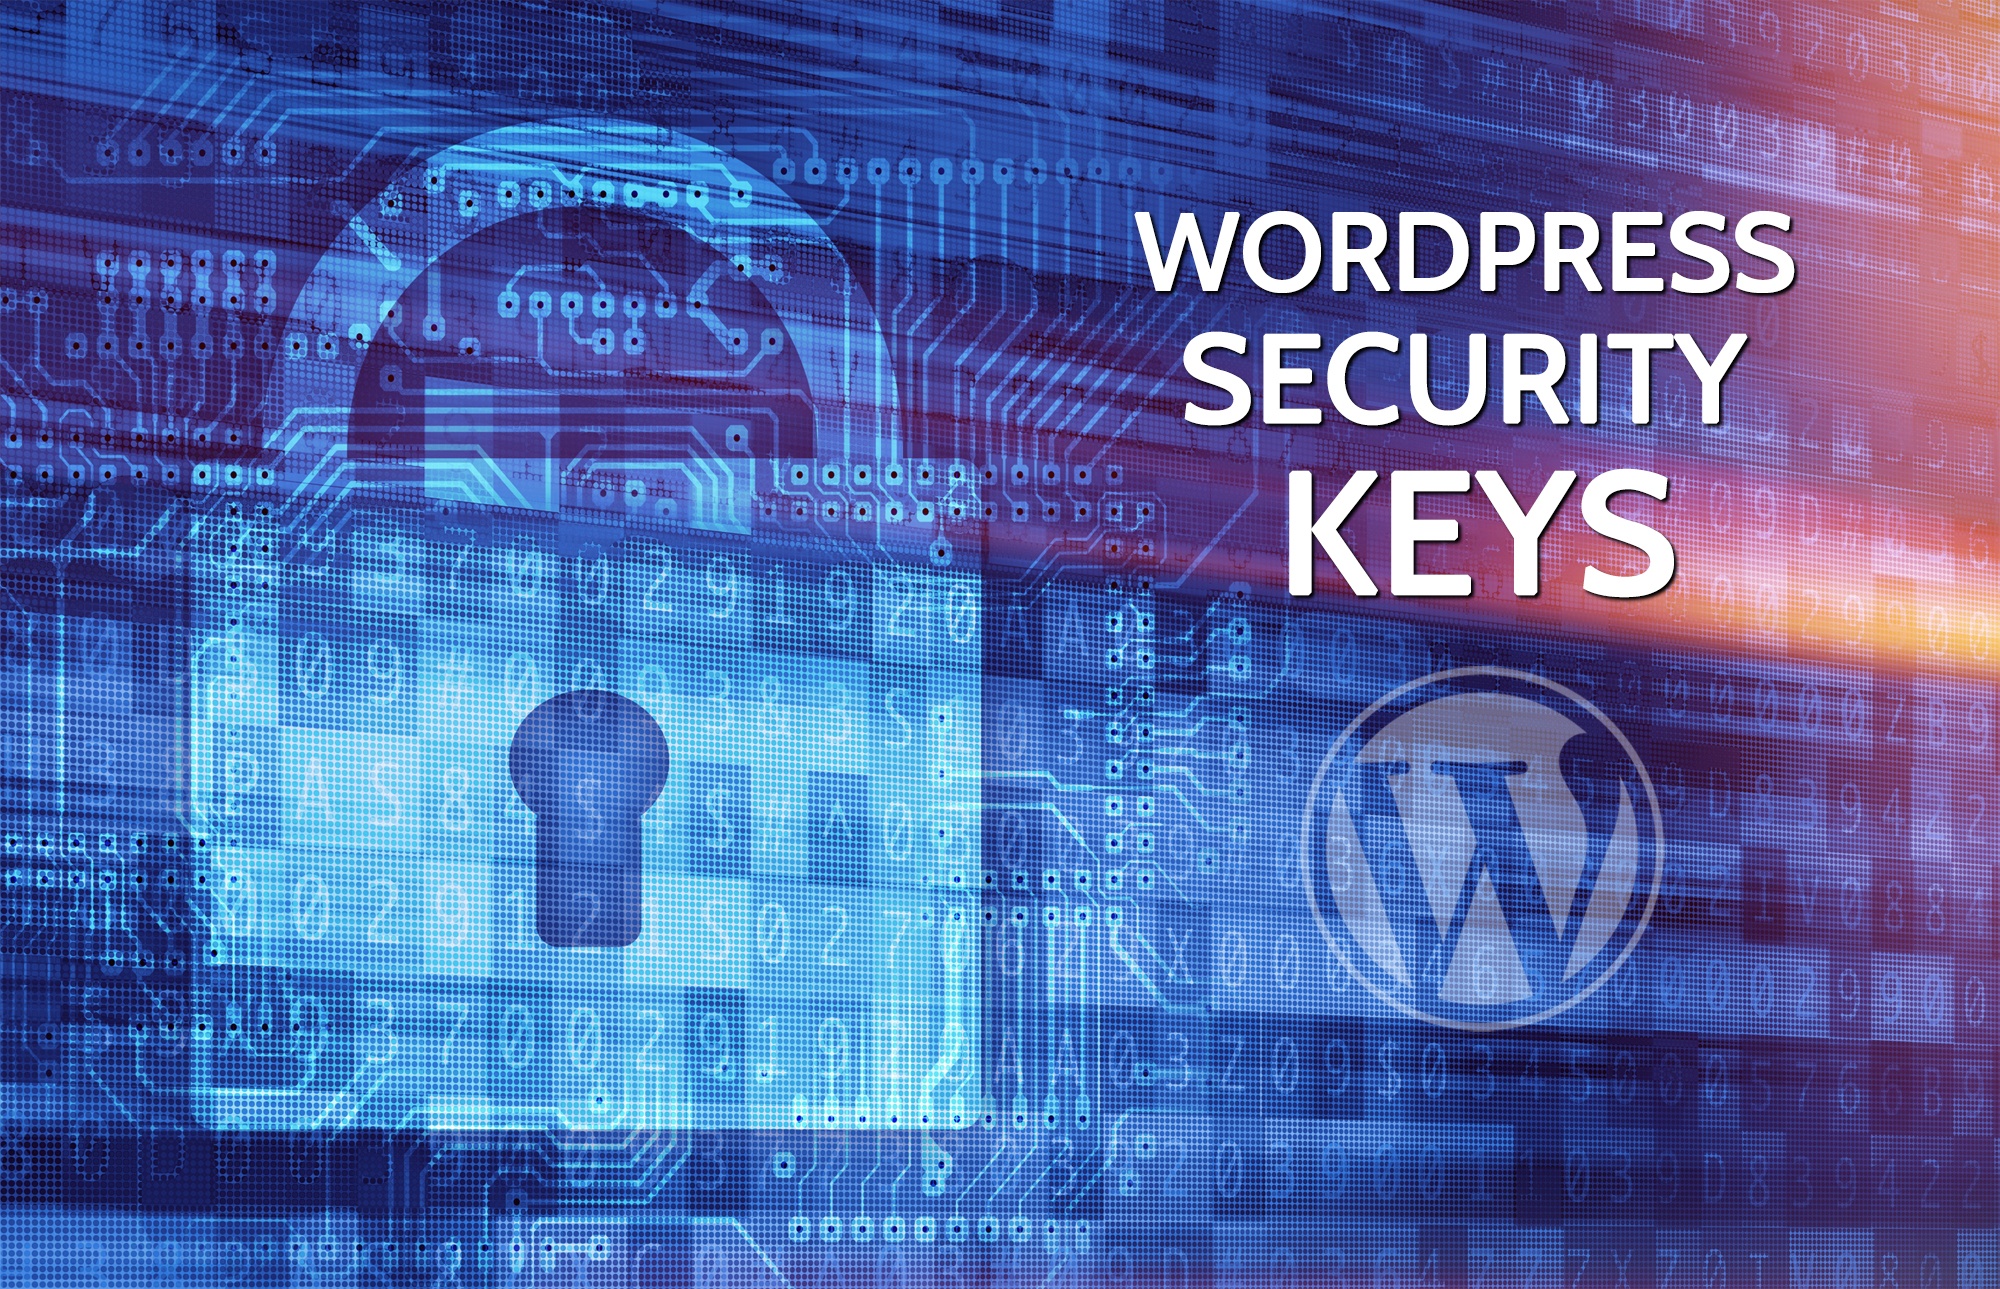 WordPress Security Keys Image